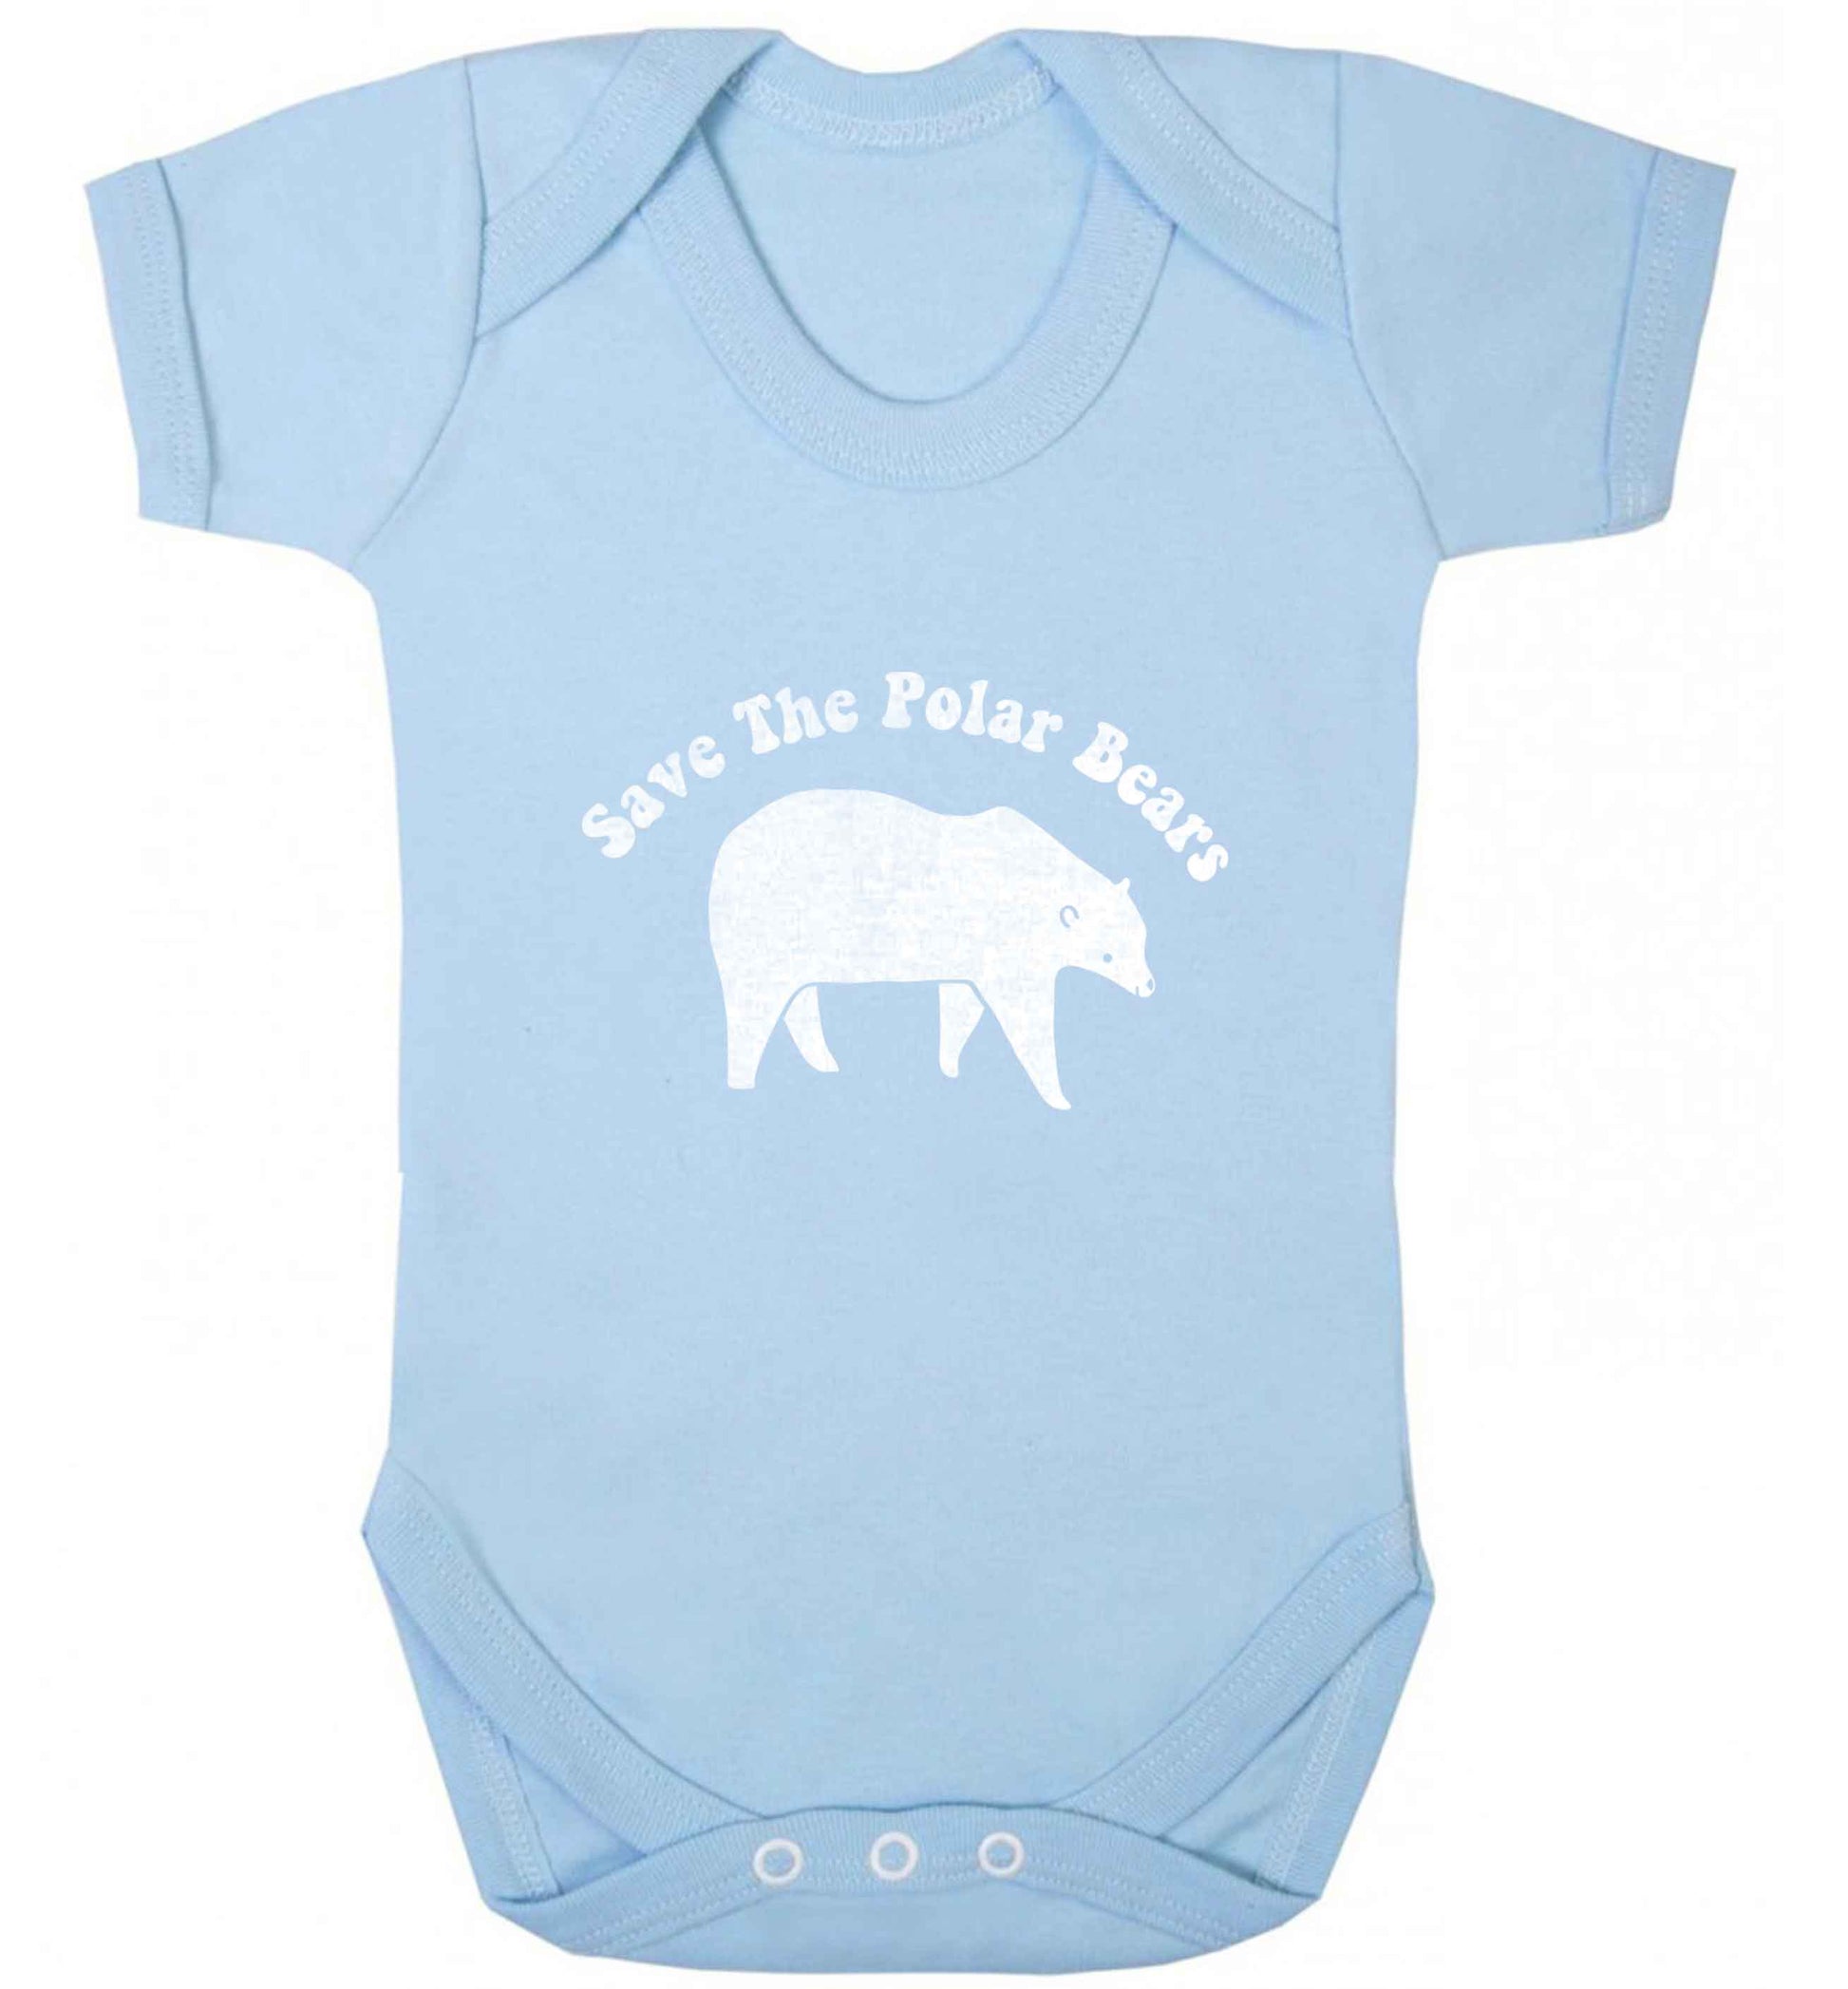 Save The Polar Bears baby vest pale blue 18-24 months